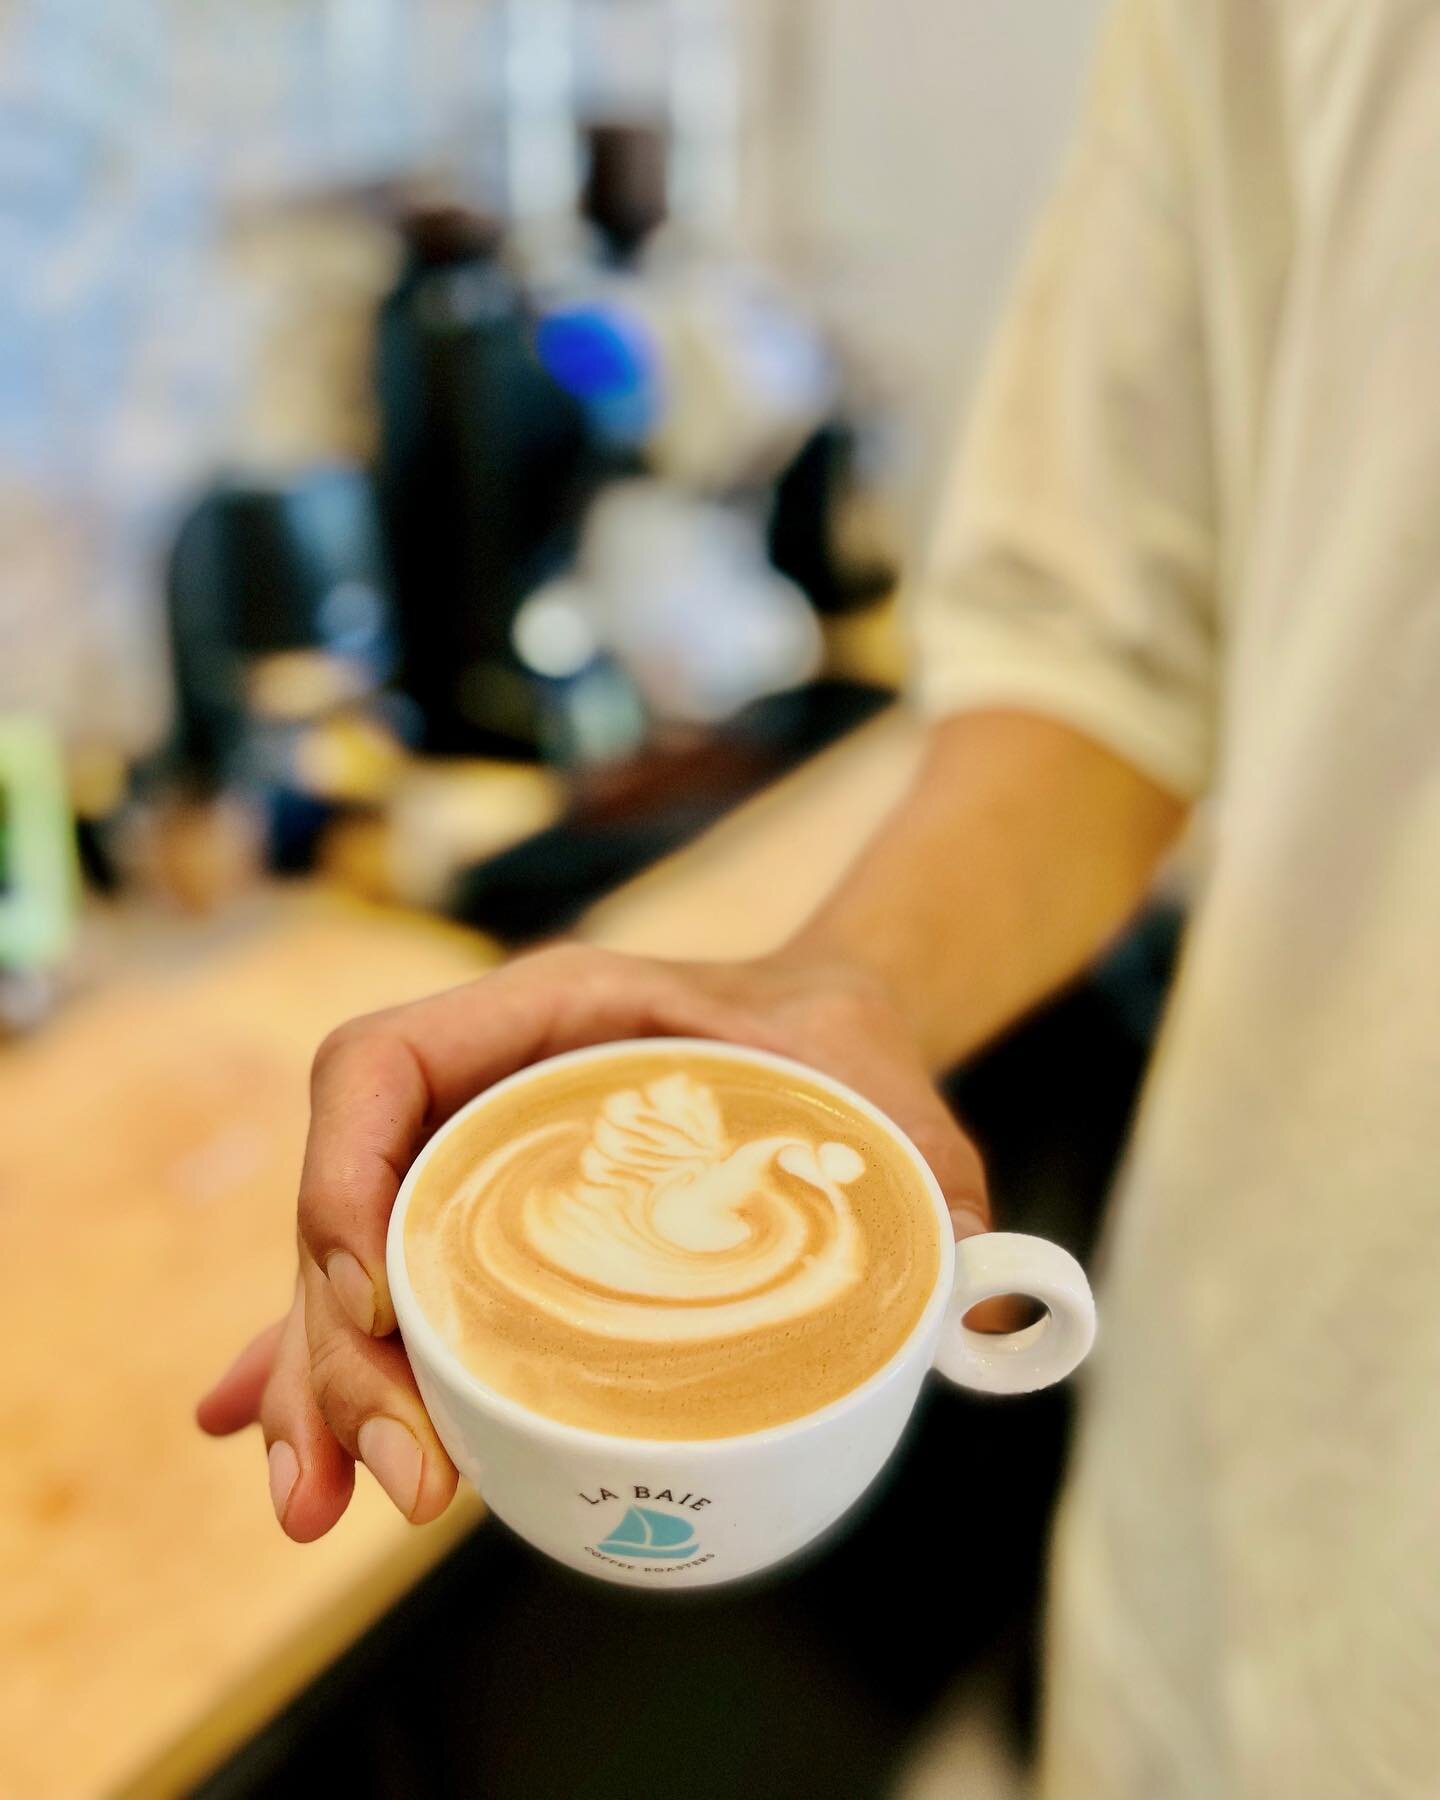 Like if you need this right now 😁
.
.
.
#specialtycoffee #latteart #swan #barista #baristadaily #lamarzocco #caliwaterloo #coffeetime #coffeeshop #coffeeaddict #lobbcoffee